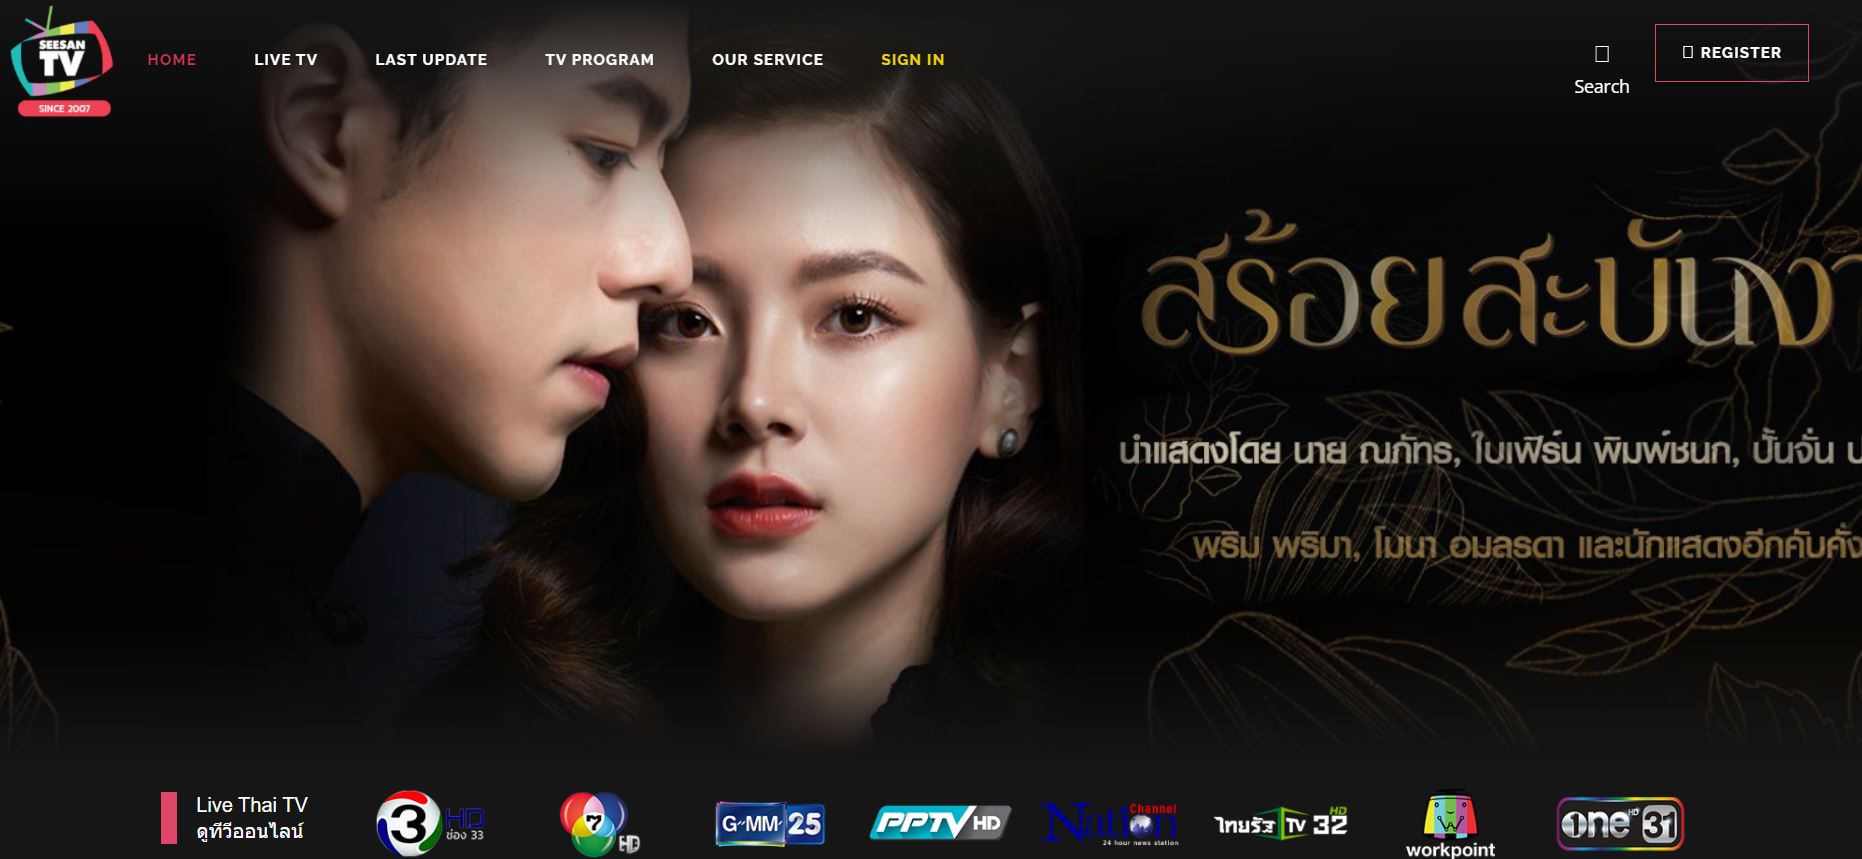 SeesanTV- Top Thai Online TV Streaming Services 2022